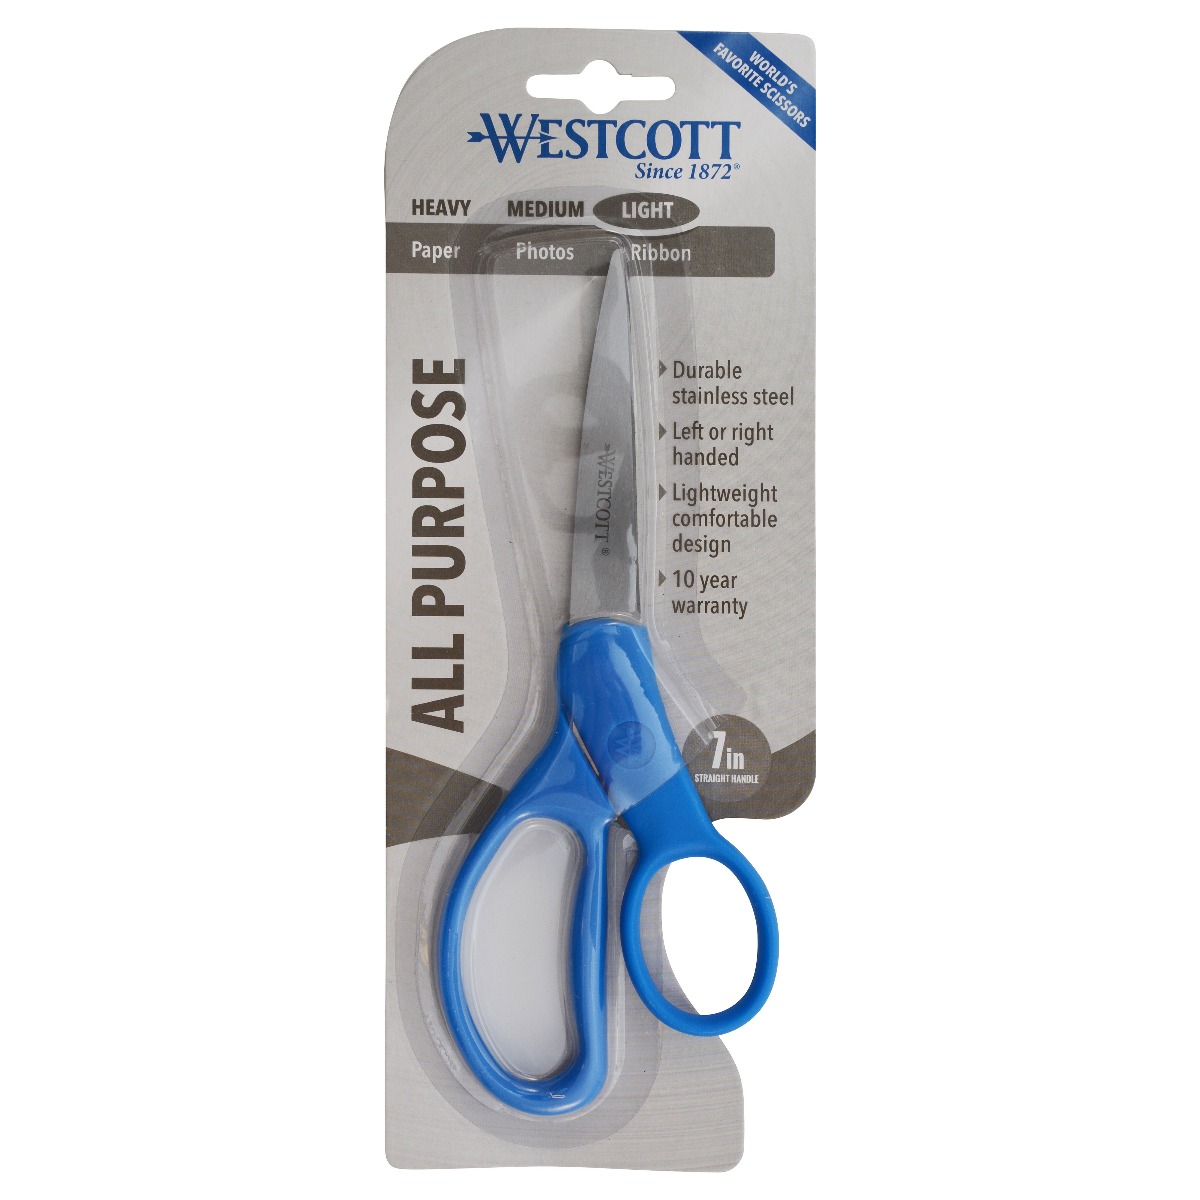 Westcott 7" All Purpose Preferred Stainless Steel Scissors, Blue (43217)